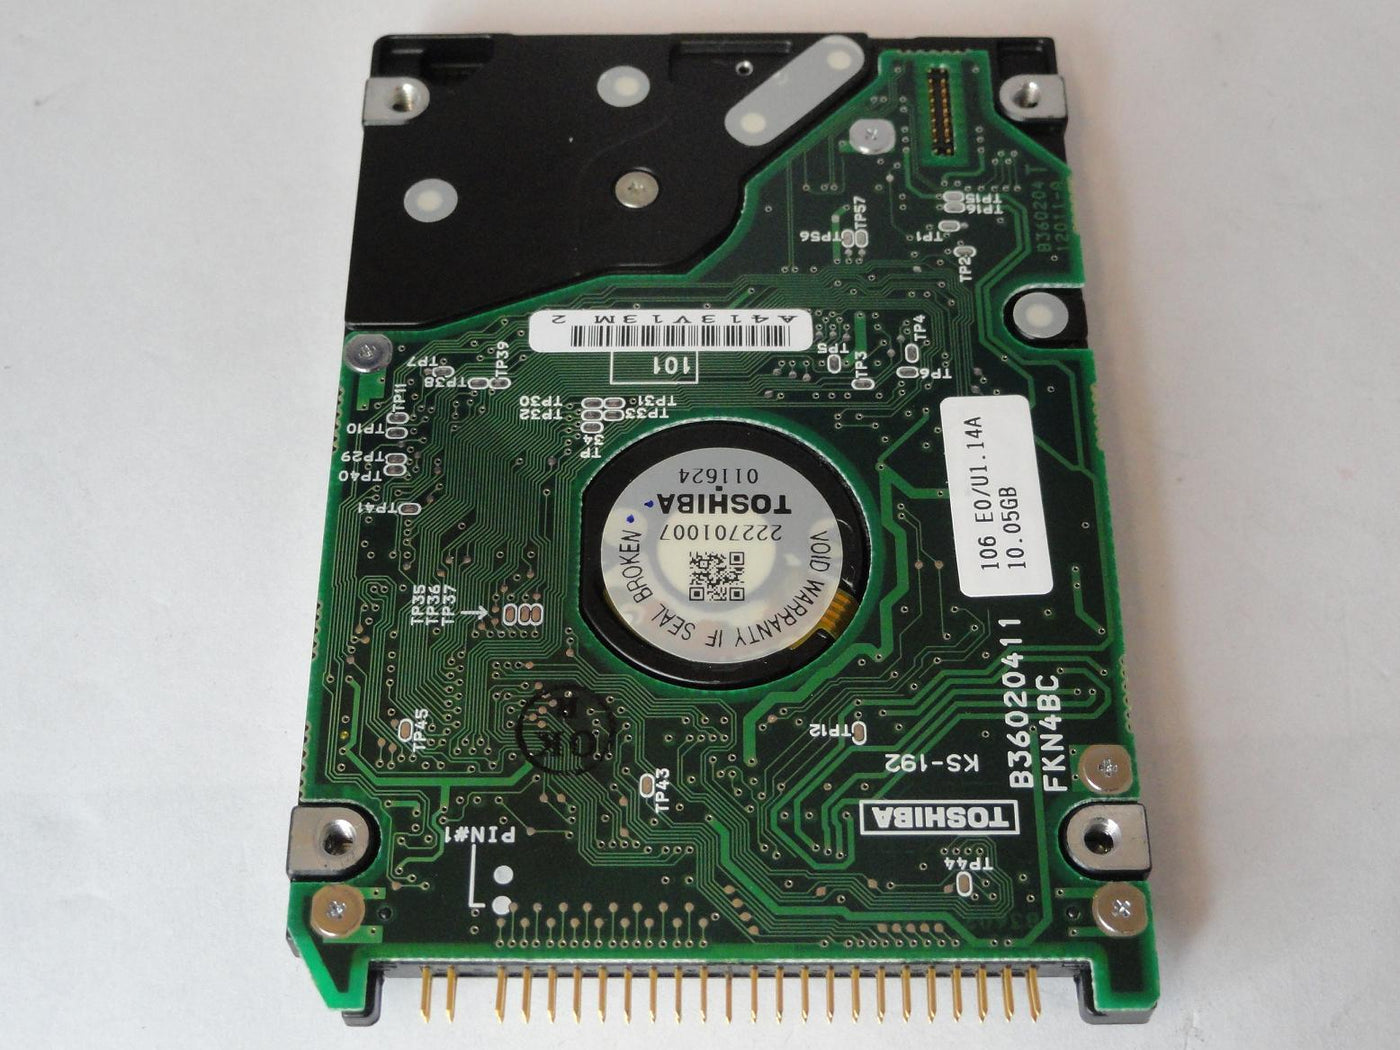 PR00285_HDD2152_Toshiba 10GB IDE 4200rpm 2.5in HDD - Image3